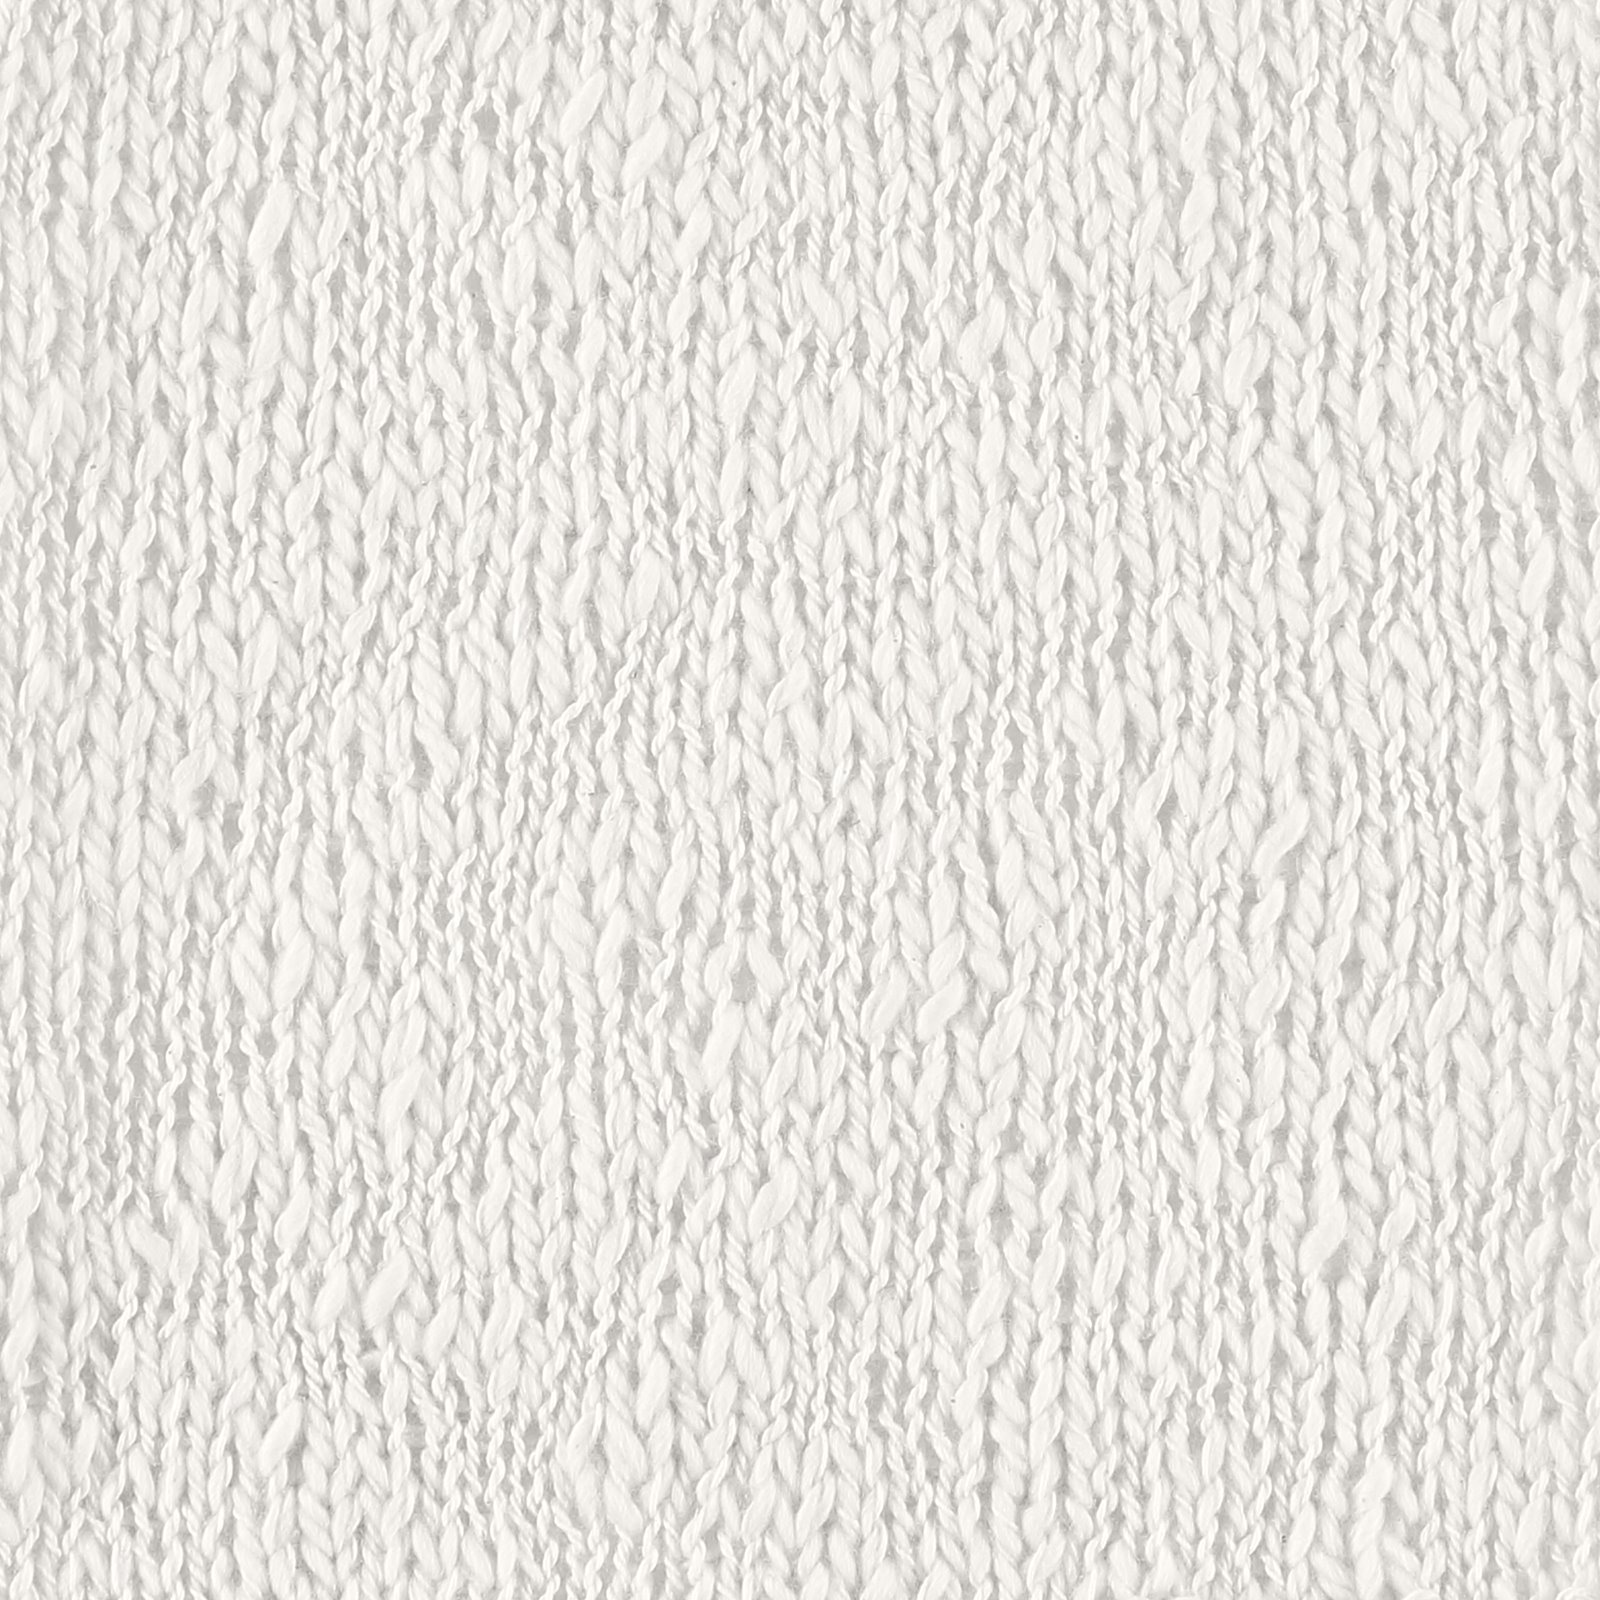 FRAYA, textured cotton yarn "Wavy", white 90000936_sskit